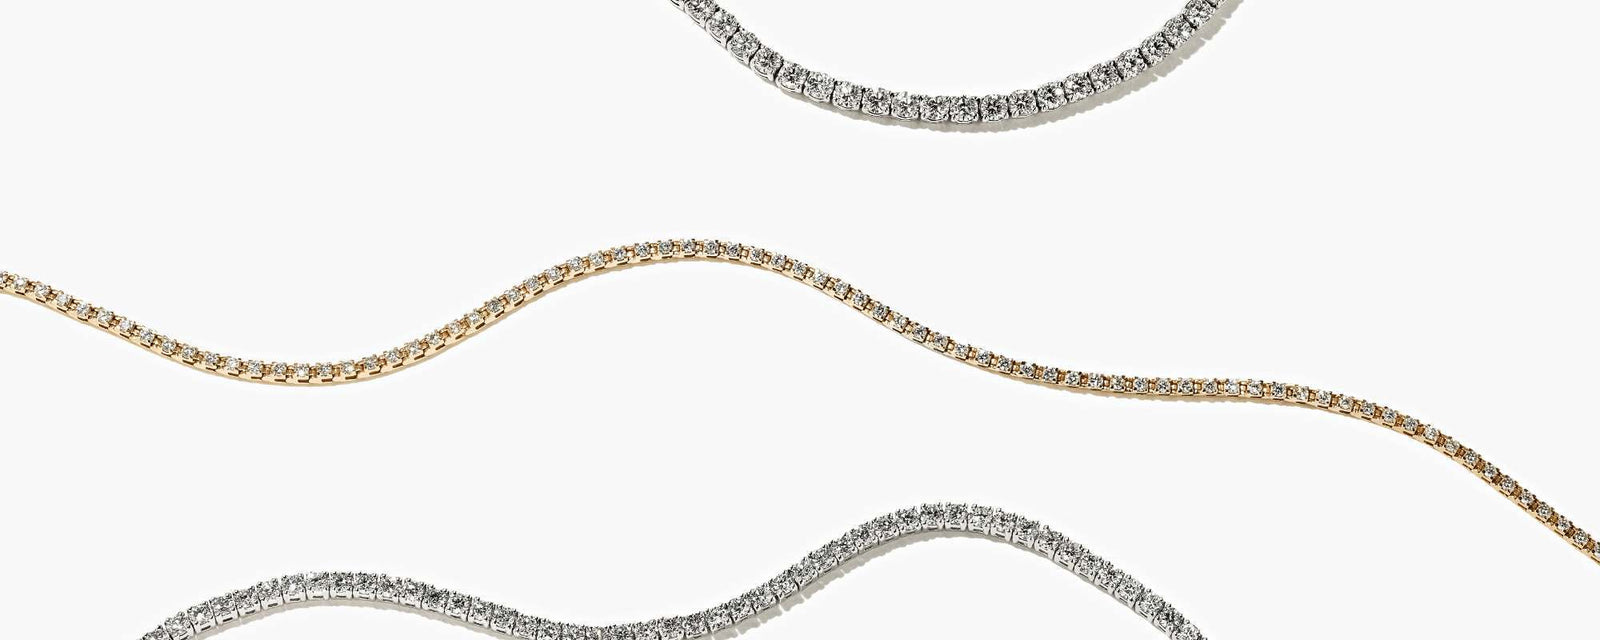 DB Classic eternity line round brilliant diamond bracelet | De Beers US